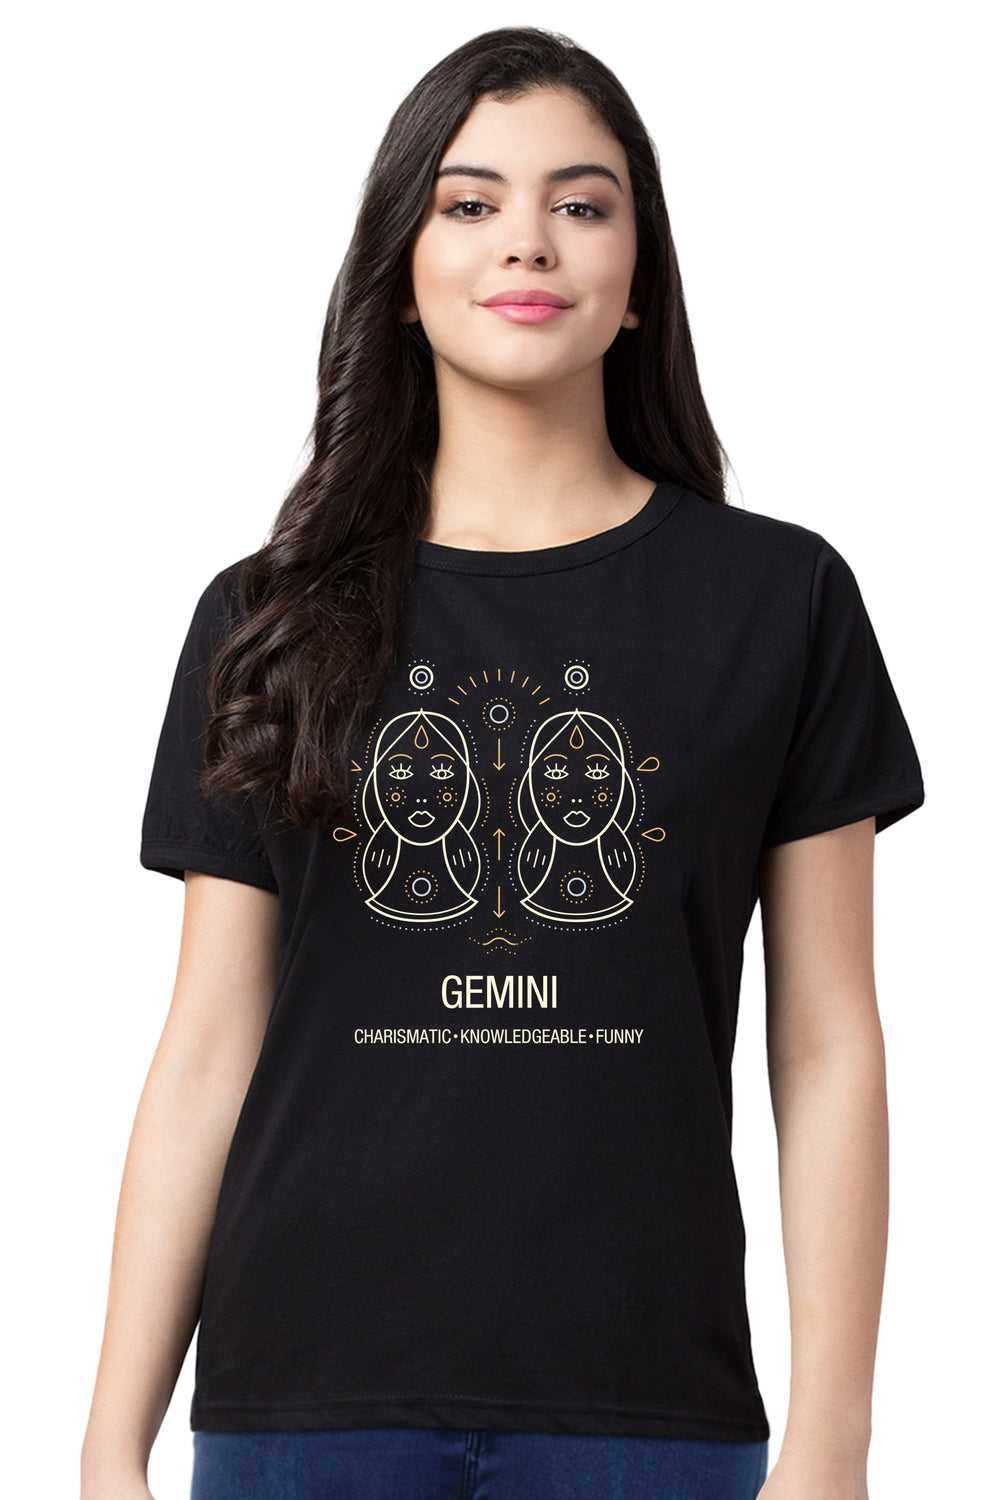 FflirtyGo Gemini Sign Printed T-Shirt - FflirtyGo